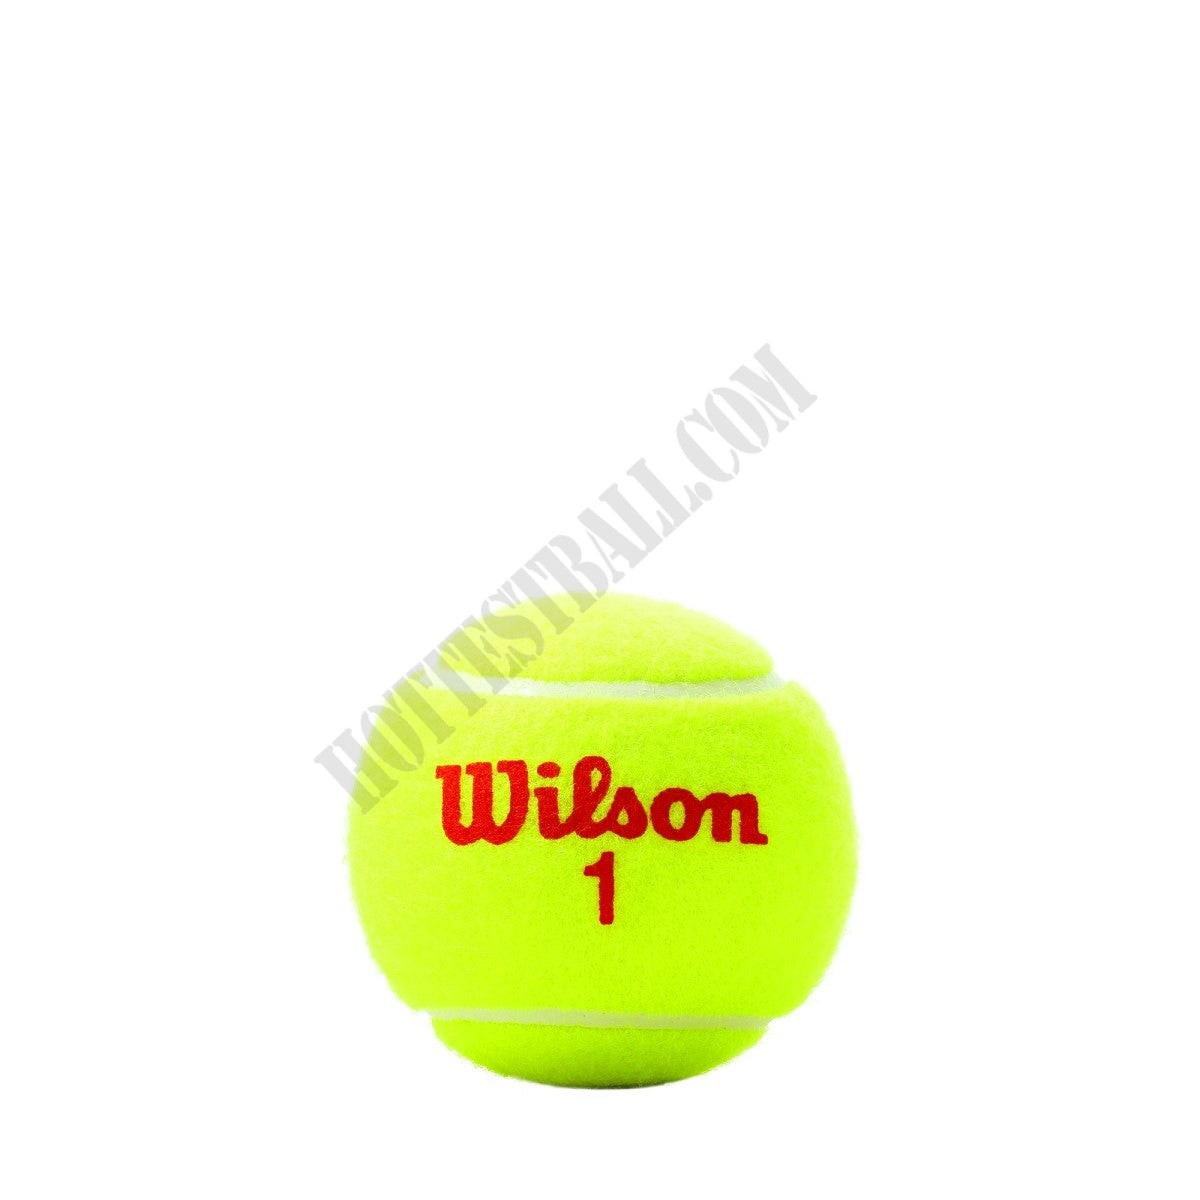 US Open Orange Tournament Transition Tennis Balls - 24 Cans (72 Balls) - Wilson Discount Store - -2